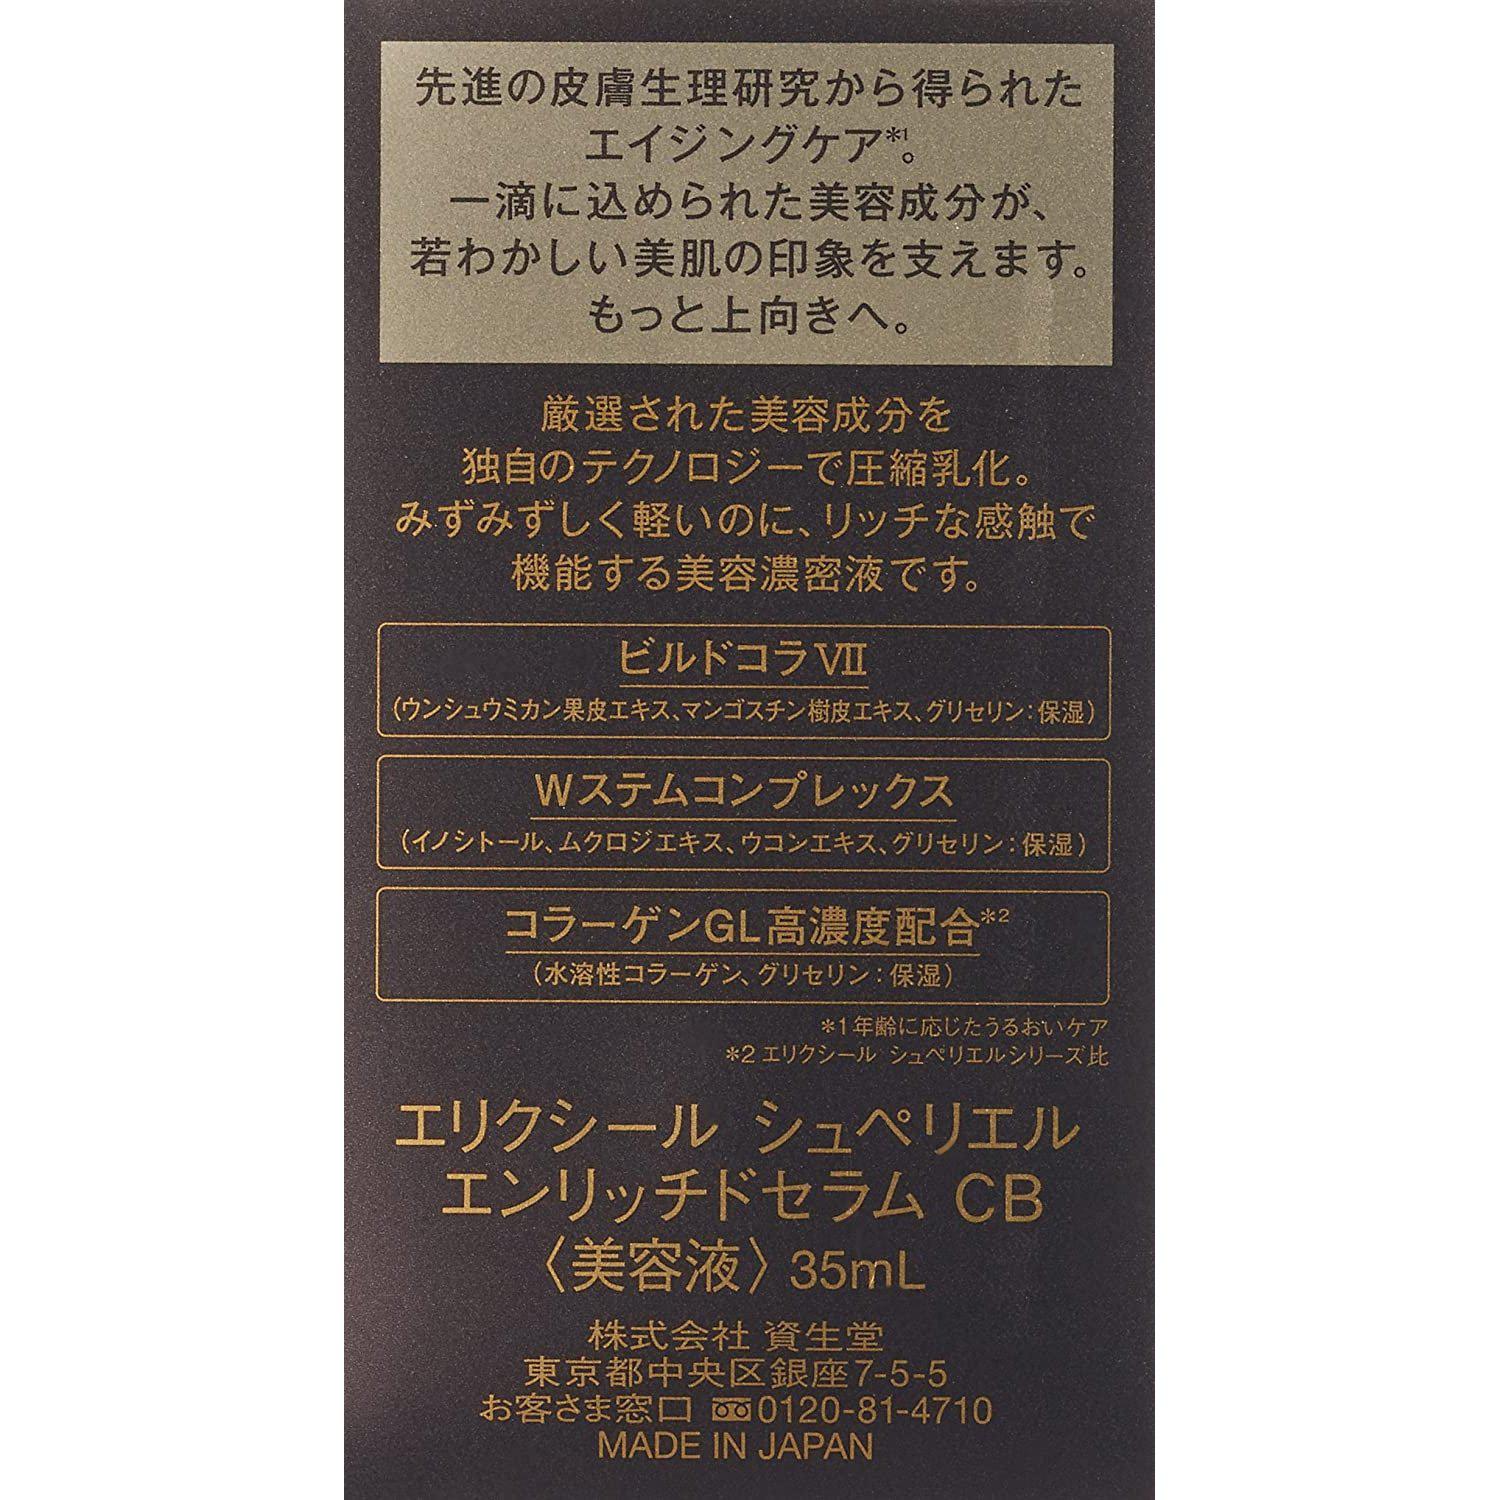 Shiseido Elixir Superieur Enriched Serum 35ml – Japanese Taste